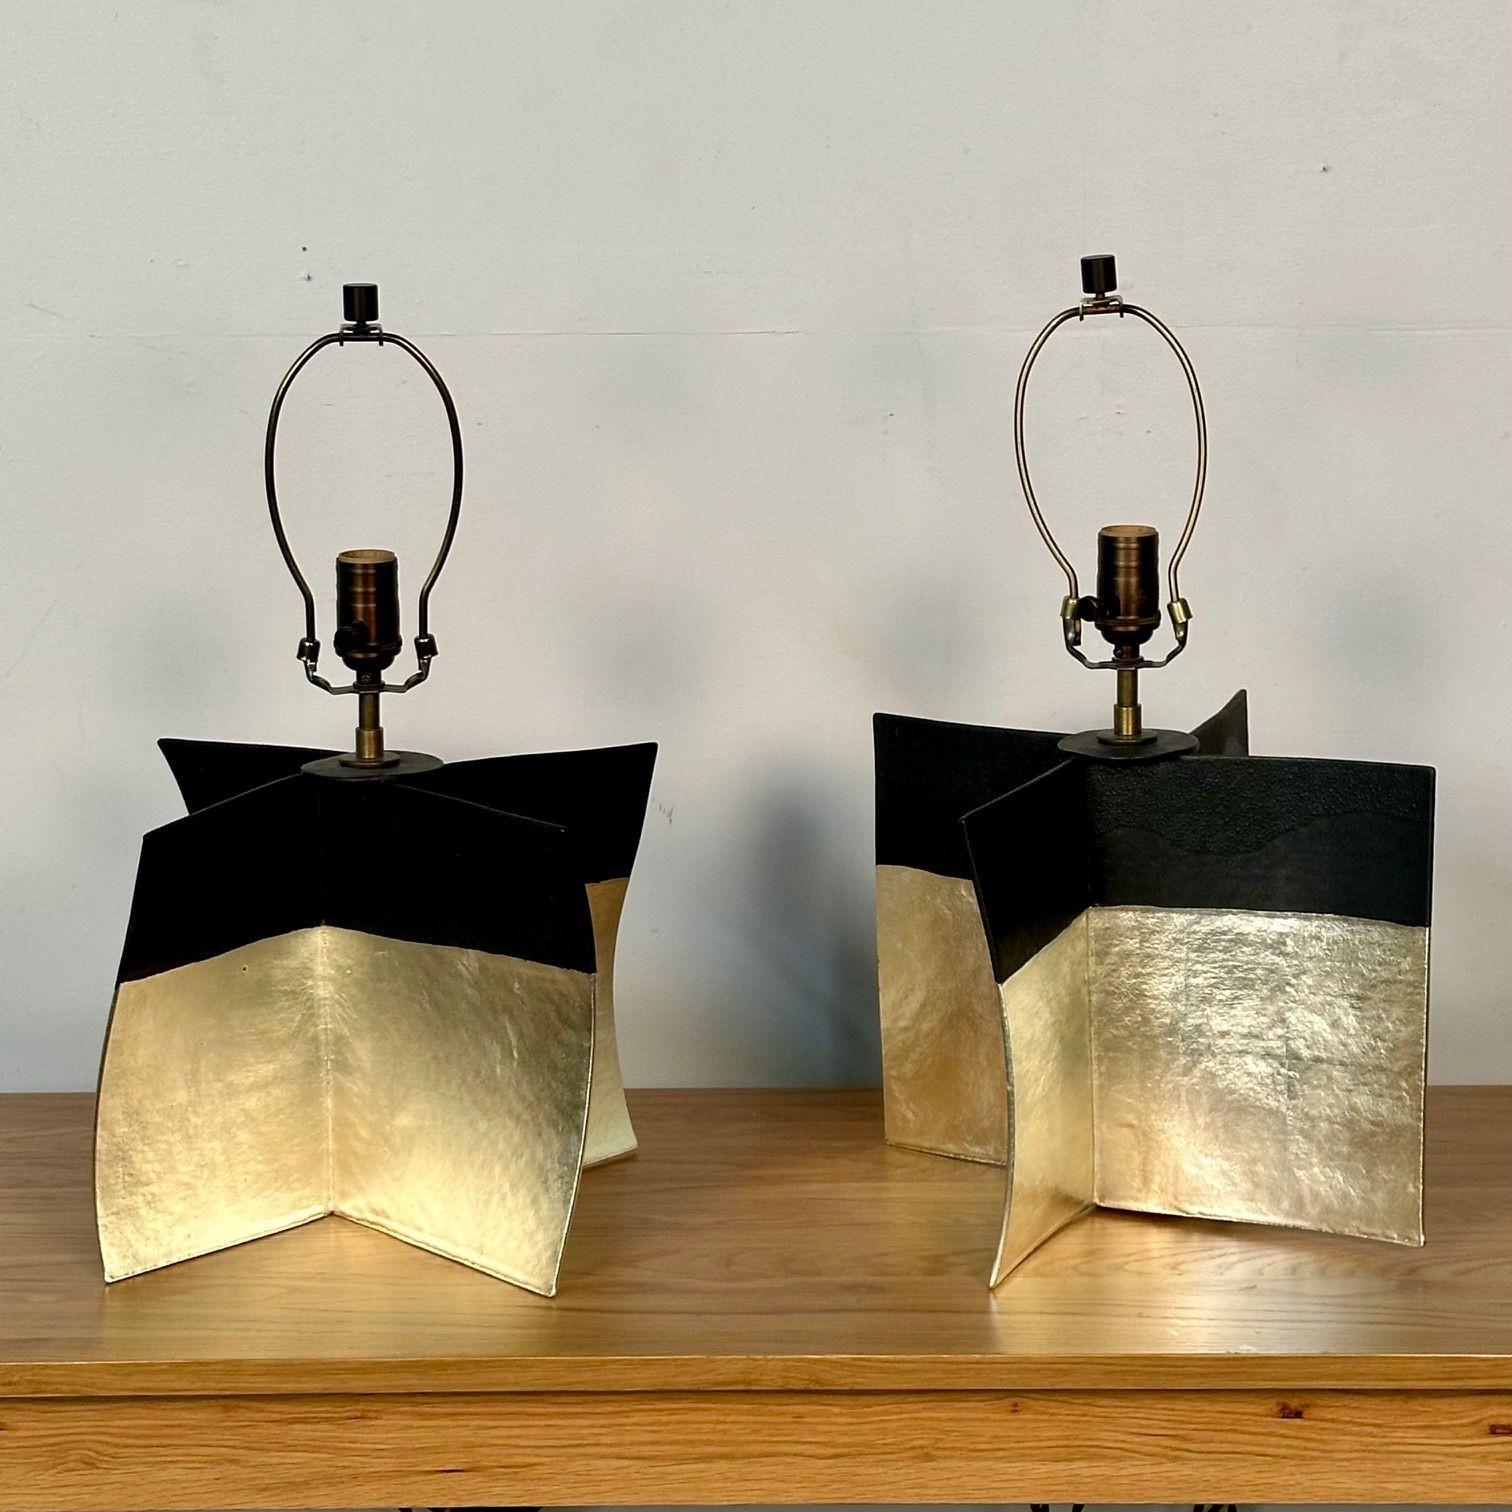 Dumais Made, Contemporary, Ceramic Croisillon Table Lamps, Gold Glaze, 2021 For Sale 6